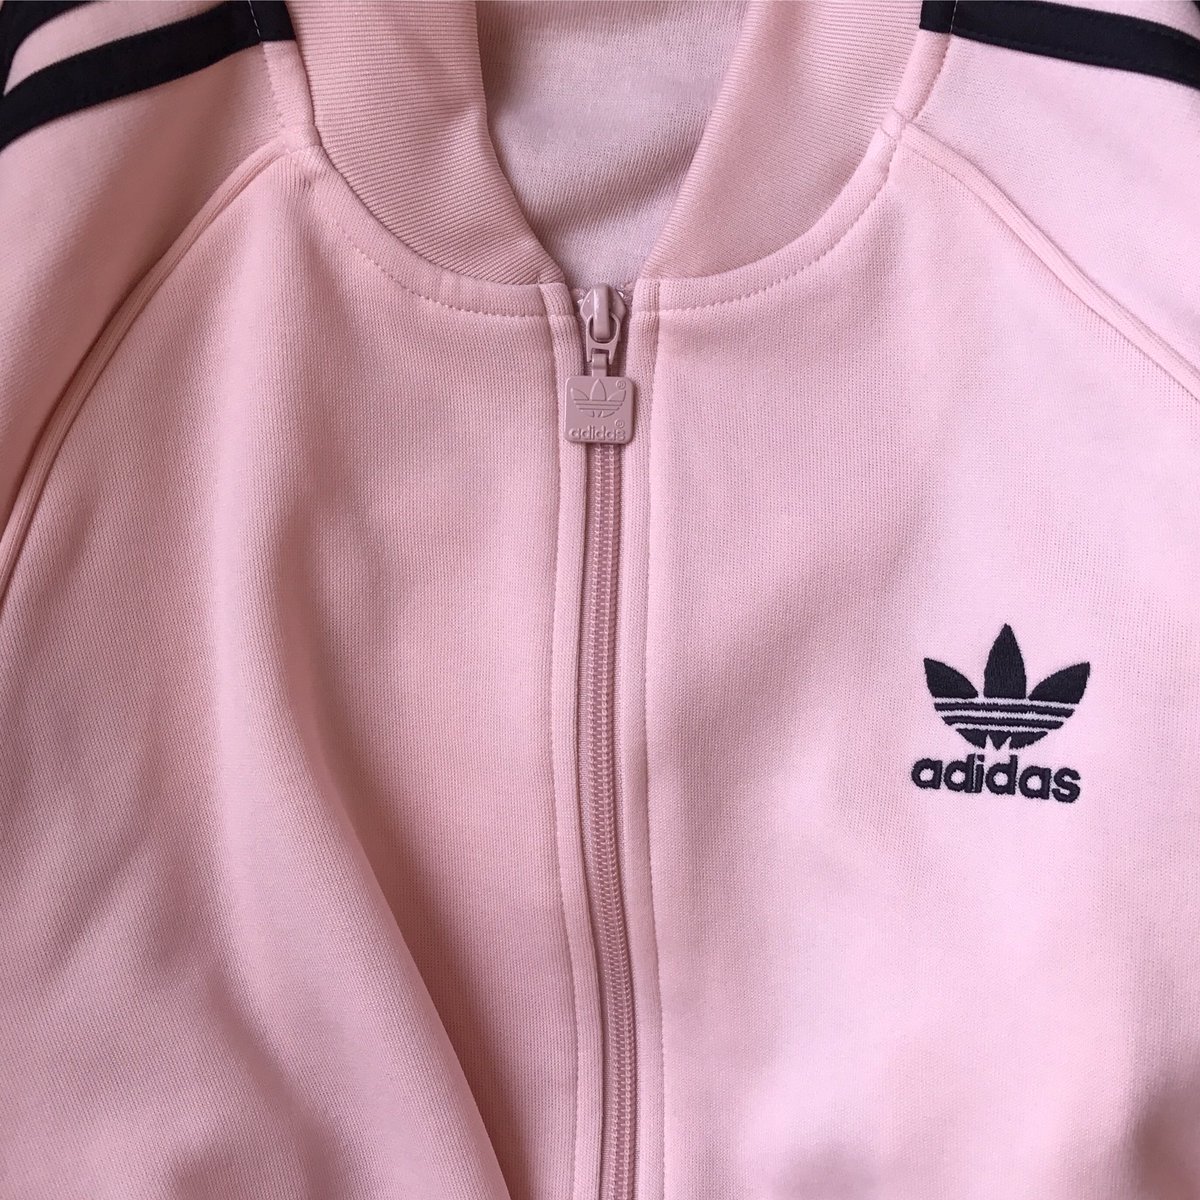 adidas pink superstar jacket